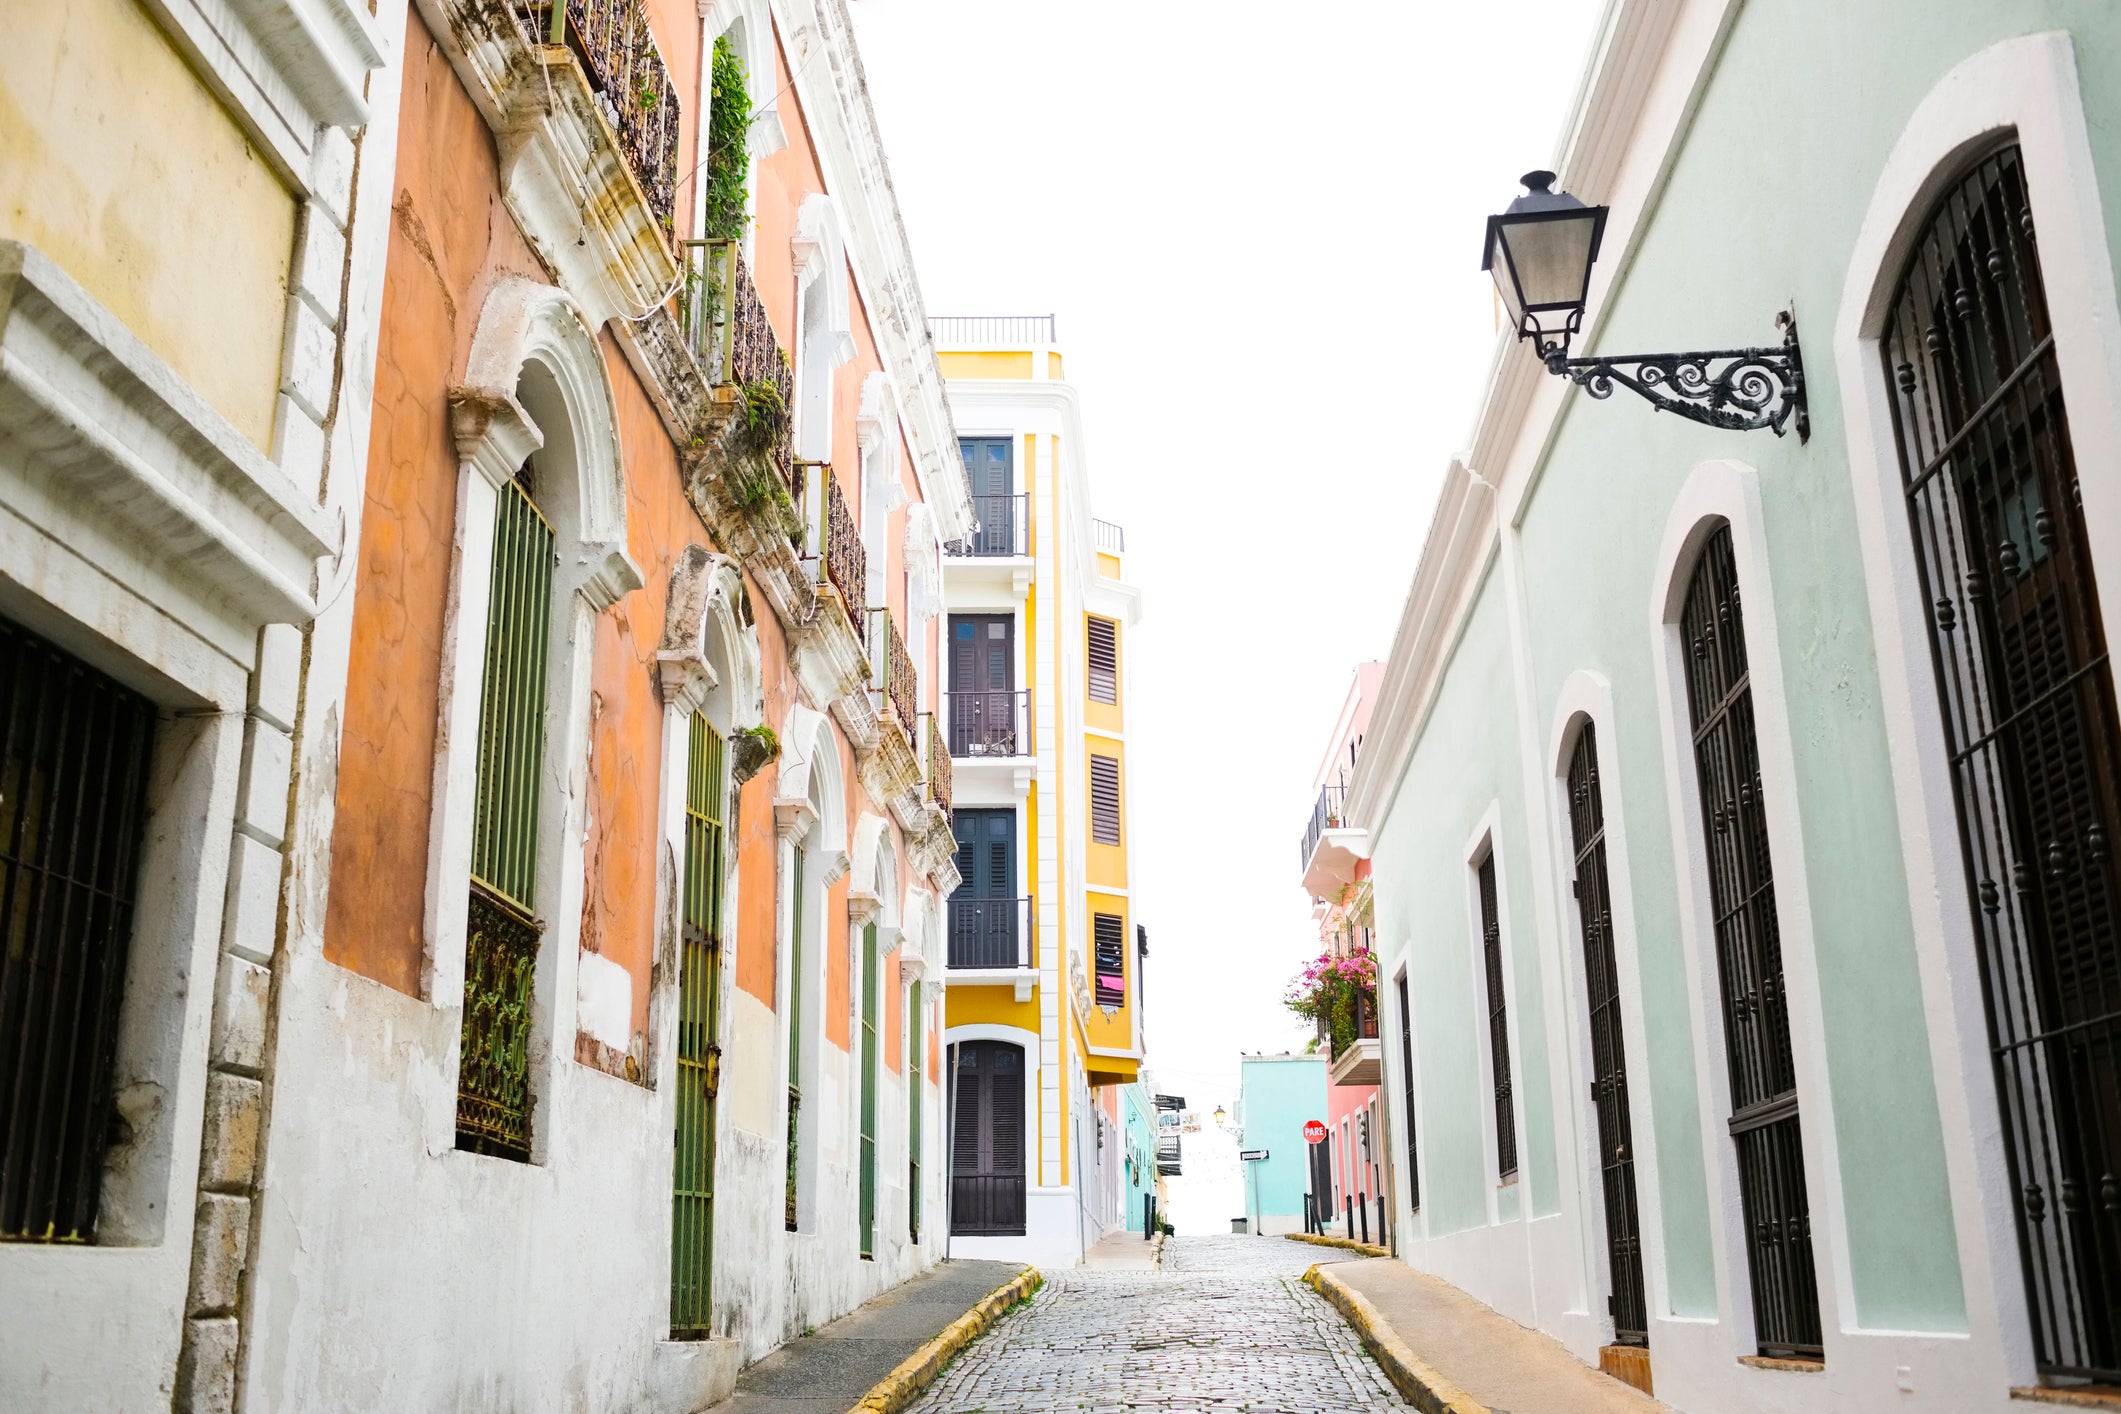 Puerto Rico, San Juan, Narrow streets of old town